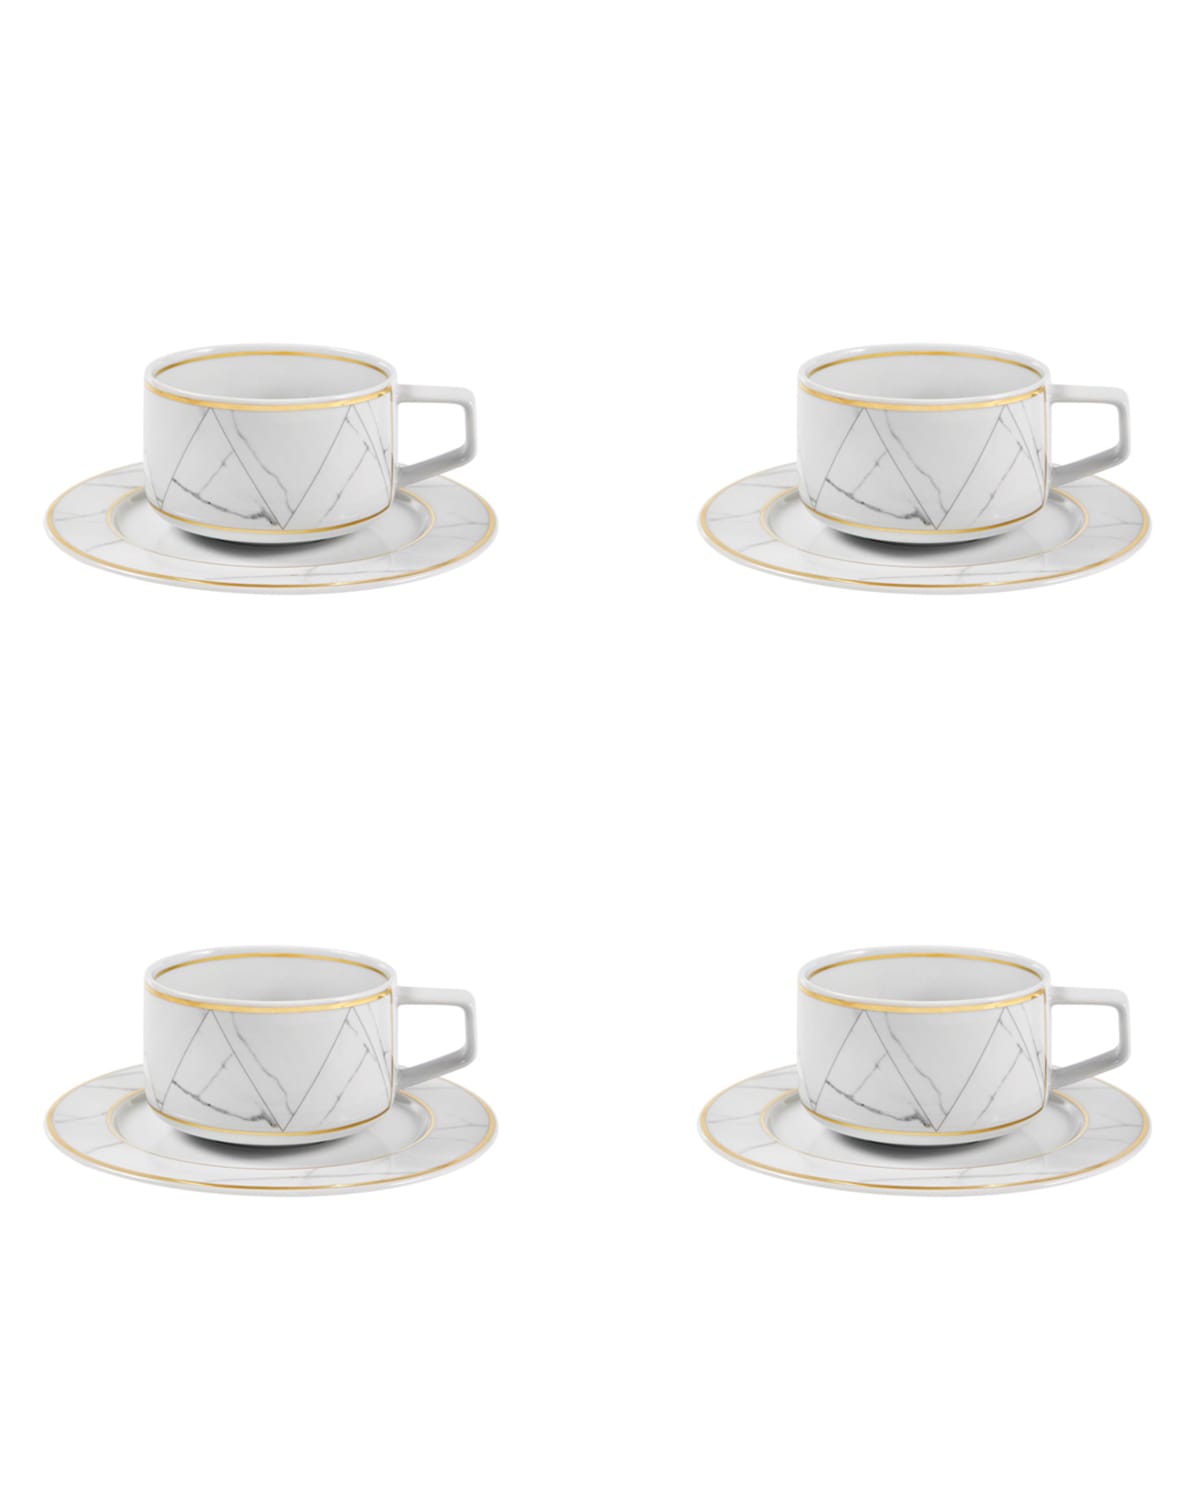 Vista Alegre Carrara Teacups And Saucers, Set Of Four In Black